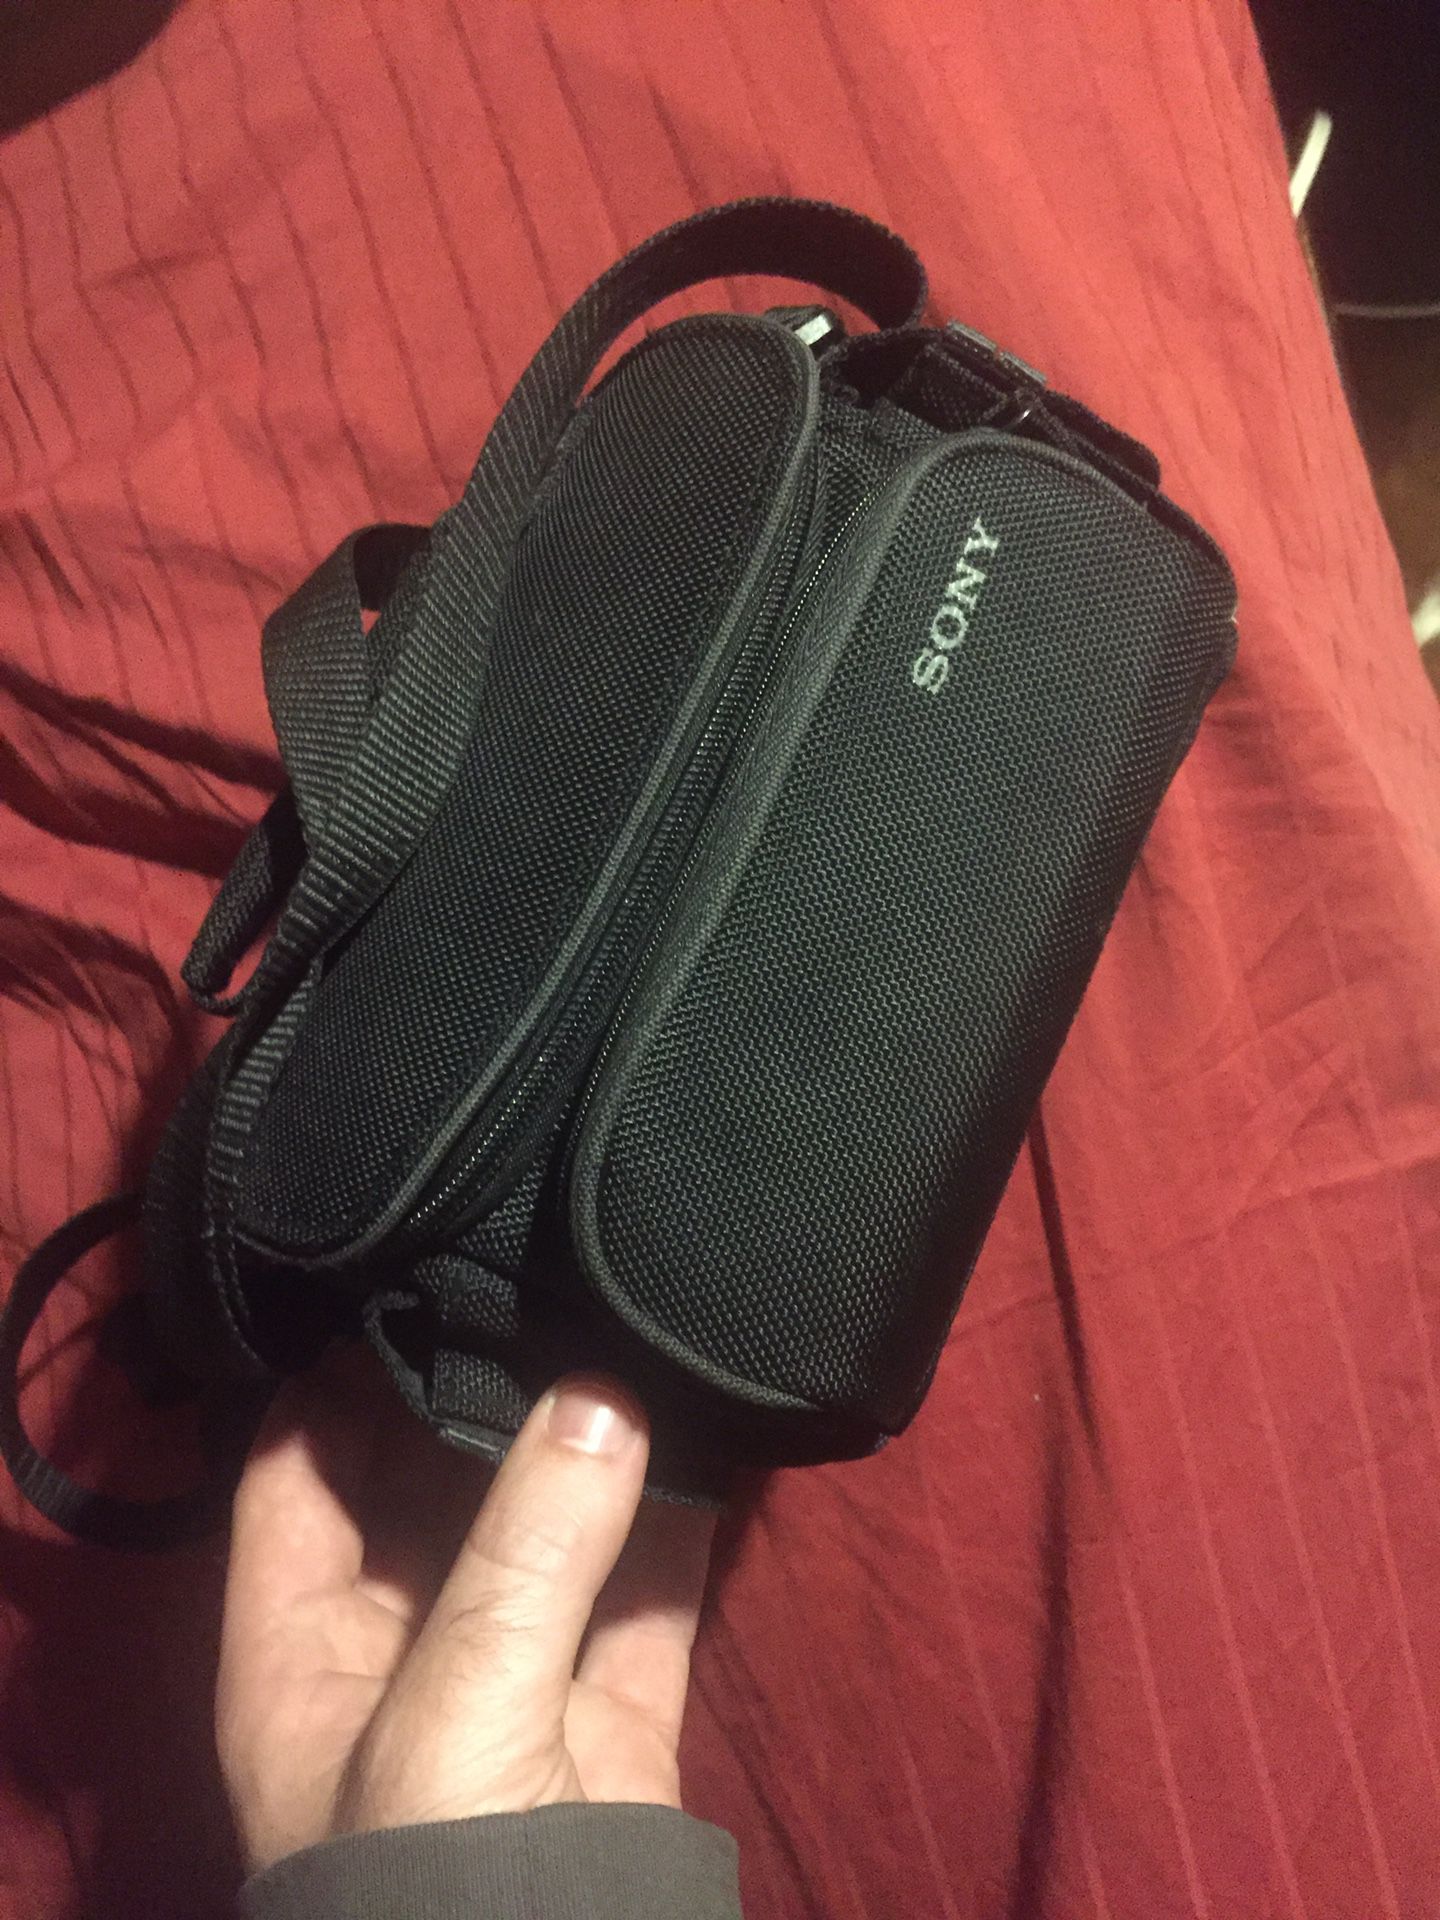 Sony camera bag